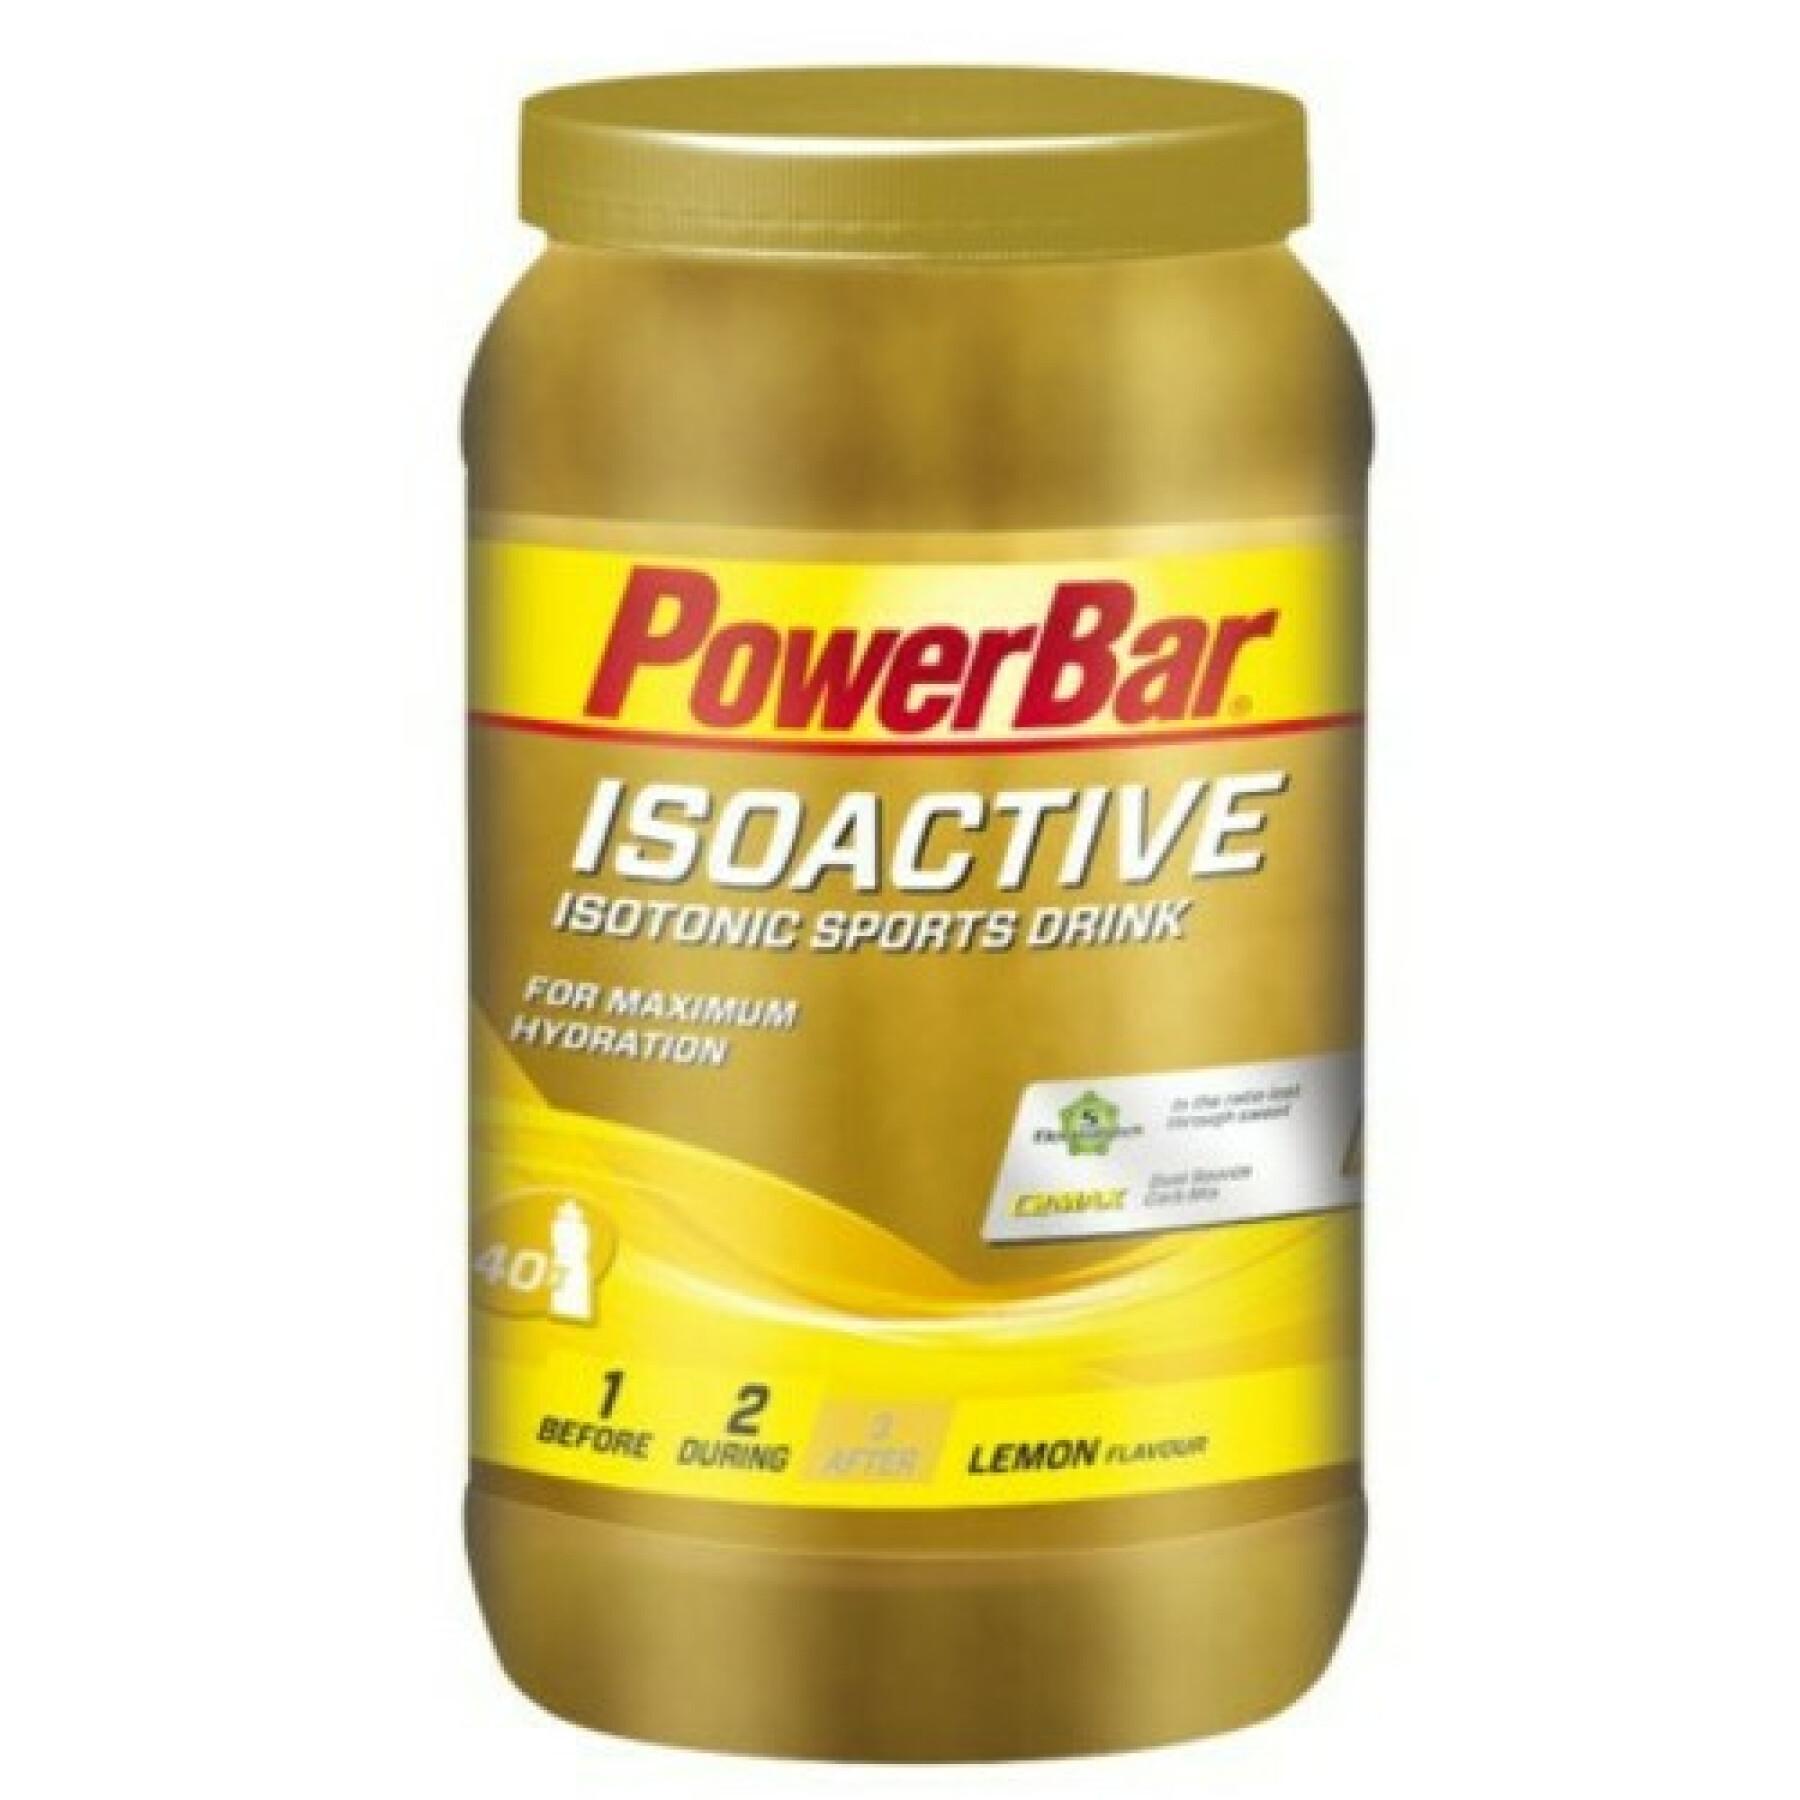 Trinken Sie PowerBar IsoActive - Lemon (1320g)